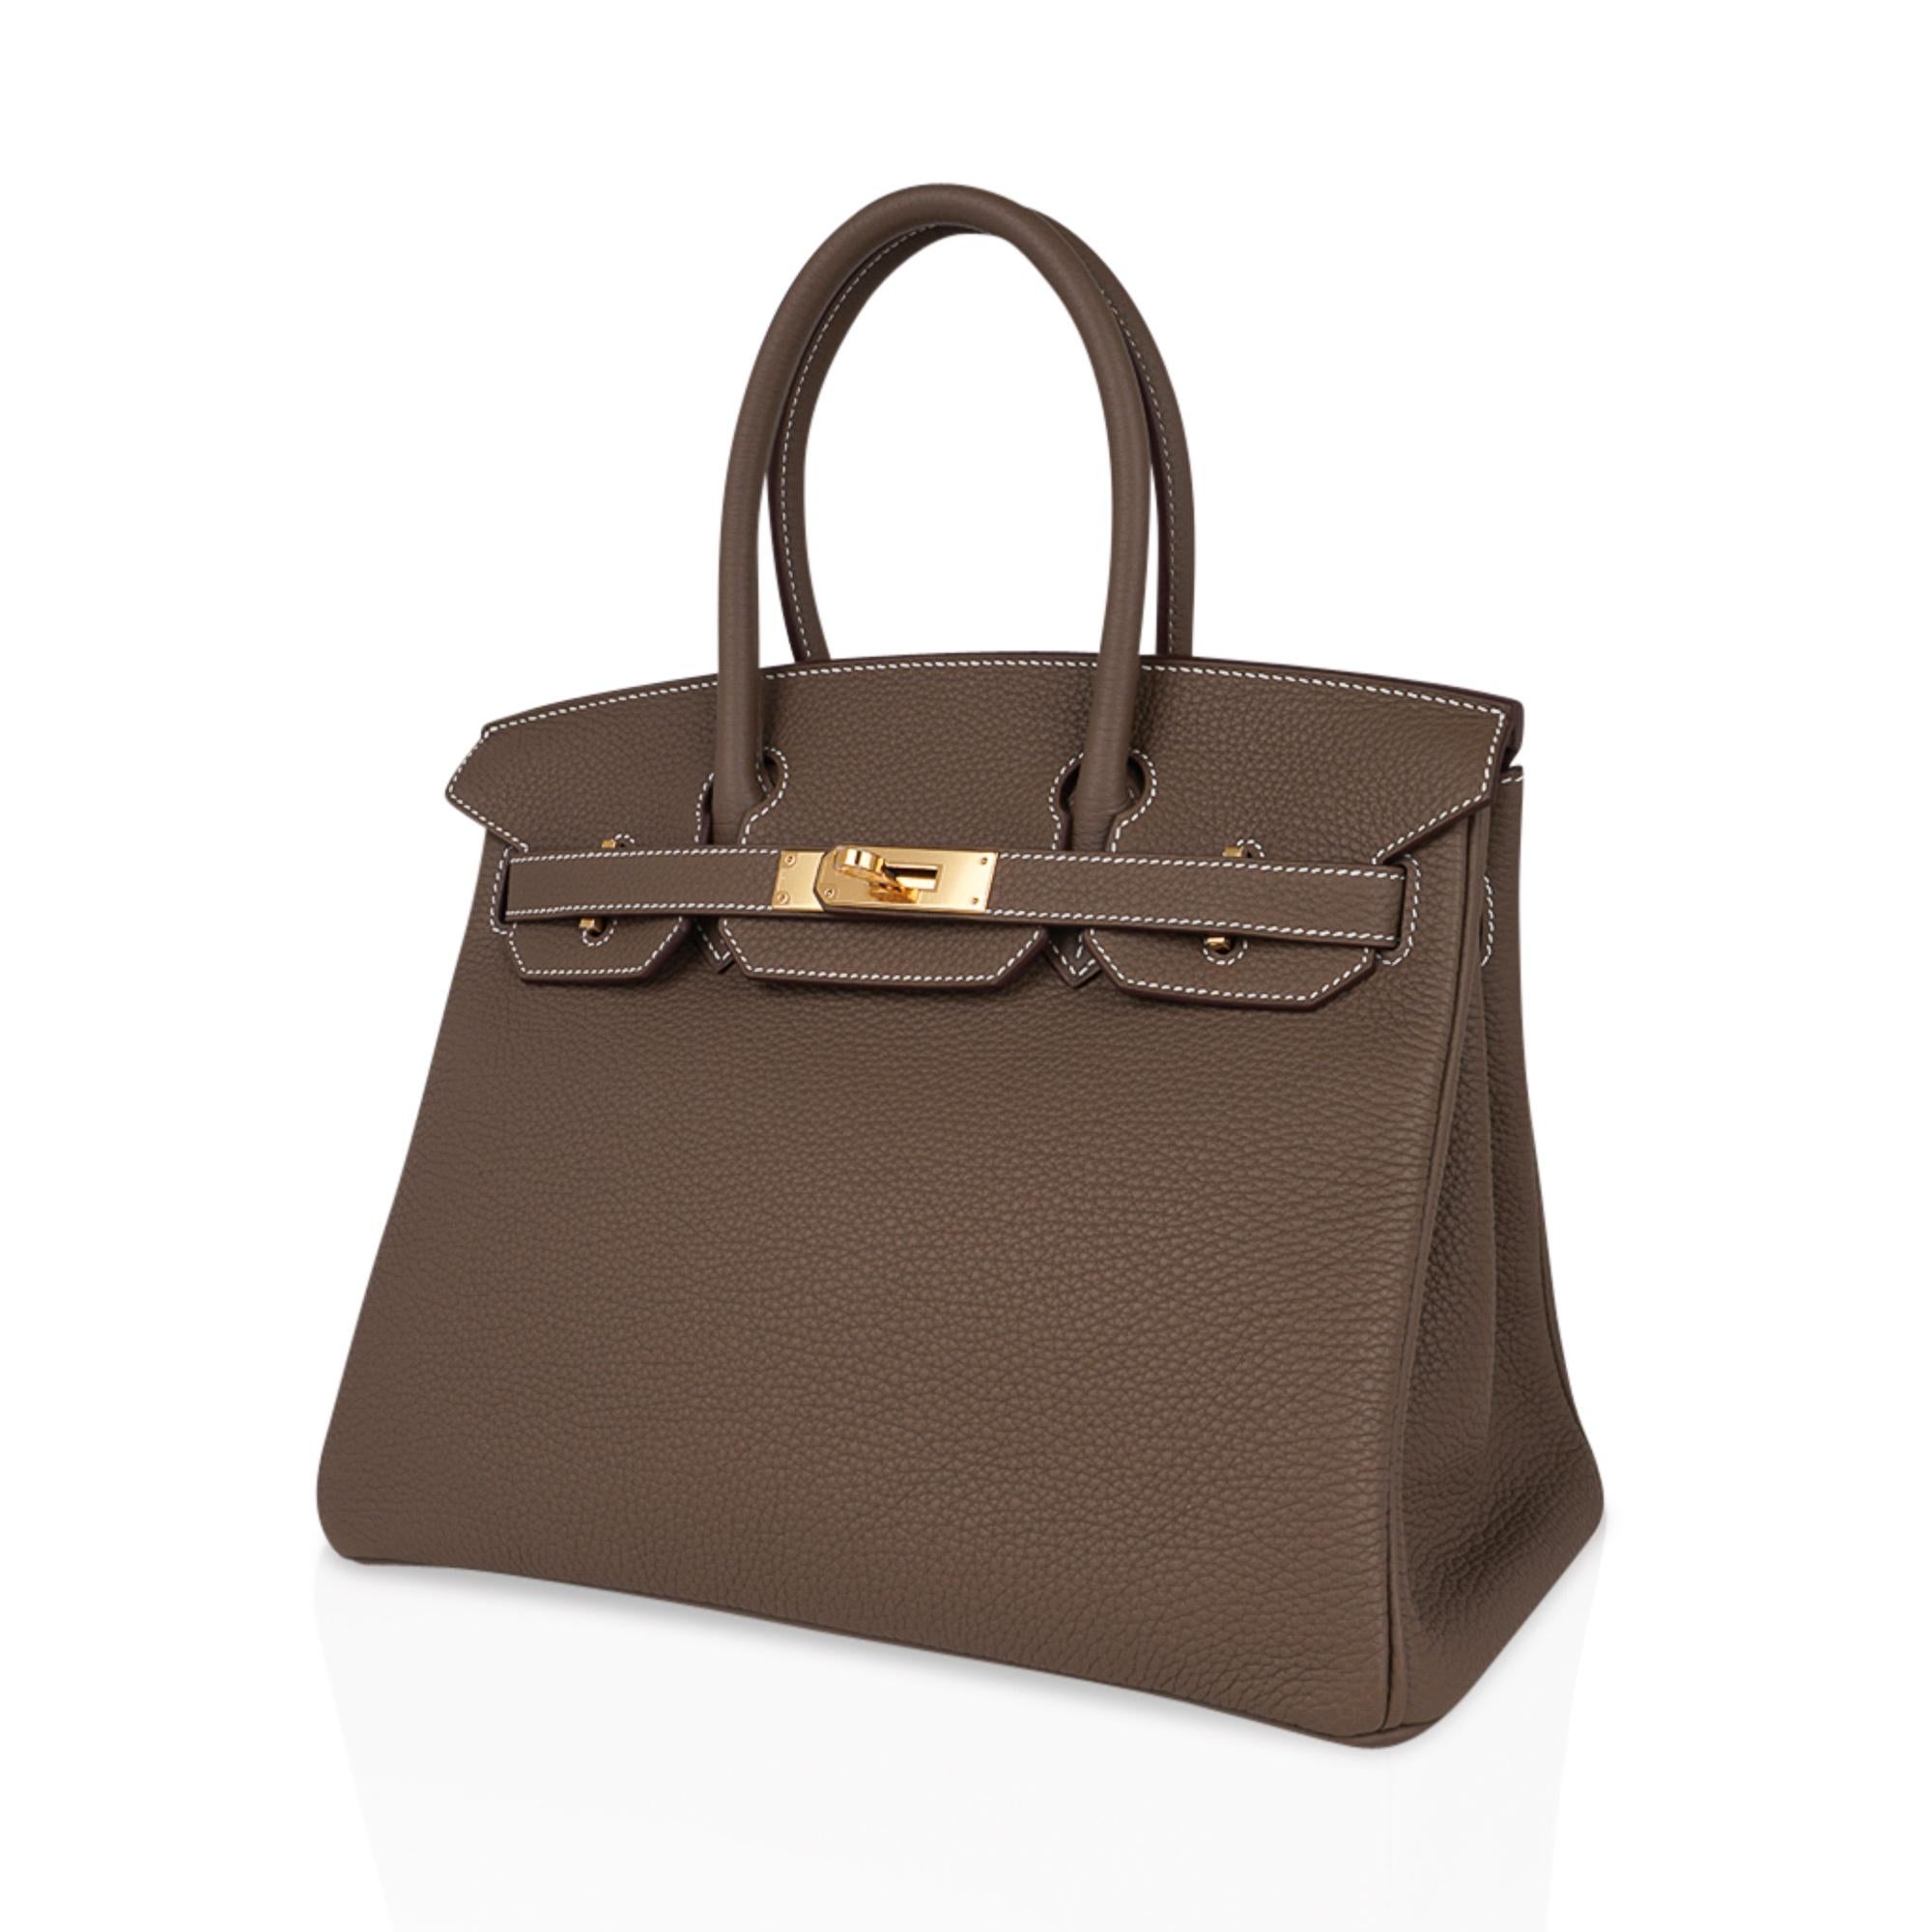 Women's Hermes Birkin 30 Bag Etoupe (Taupe) Gold Hardware Togo Leather